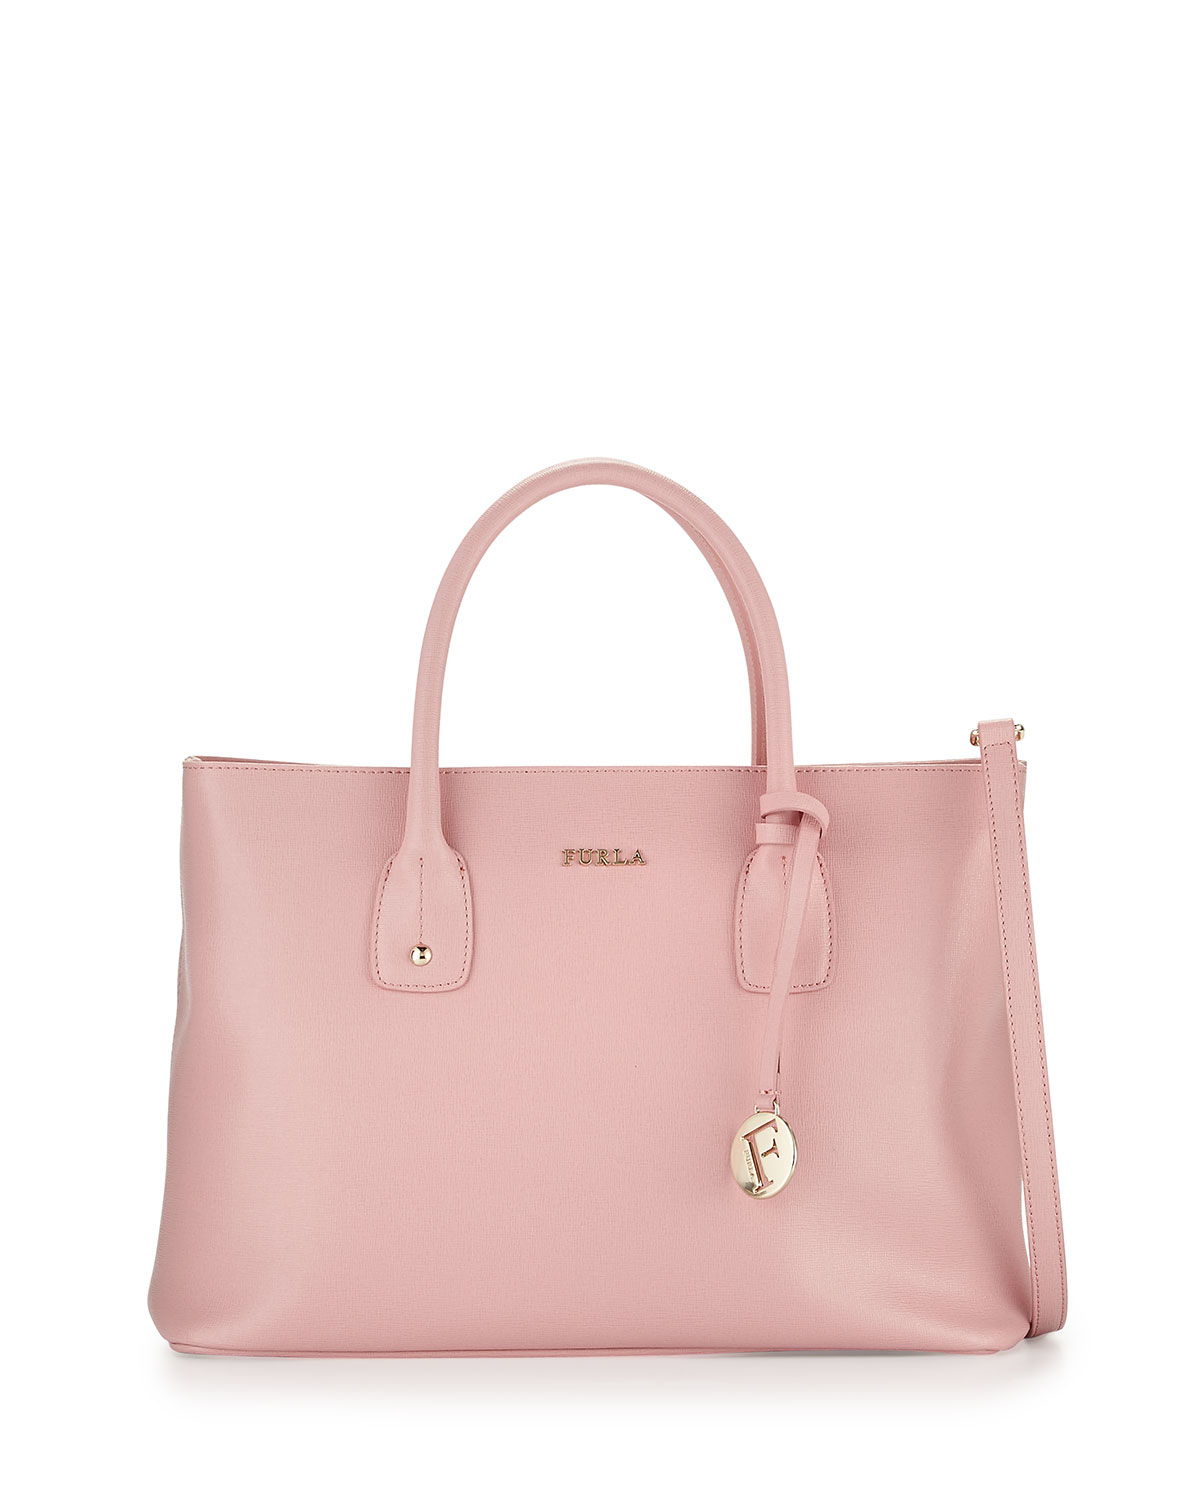 Furla Josi Medium Leather Tote Bag in Pink - Lyst